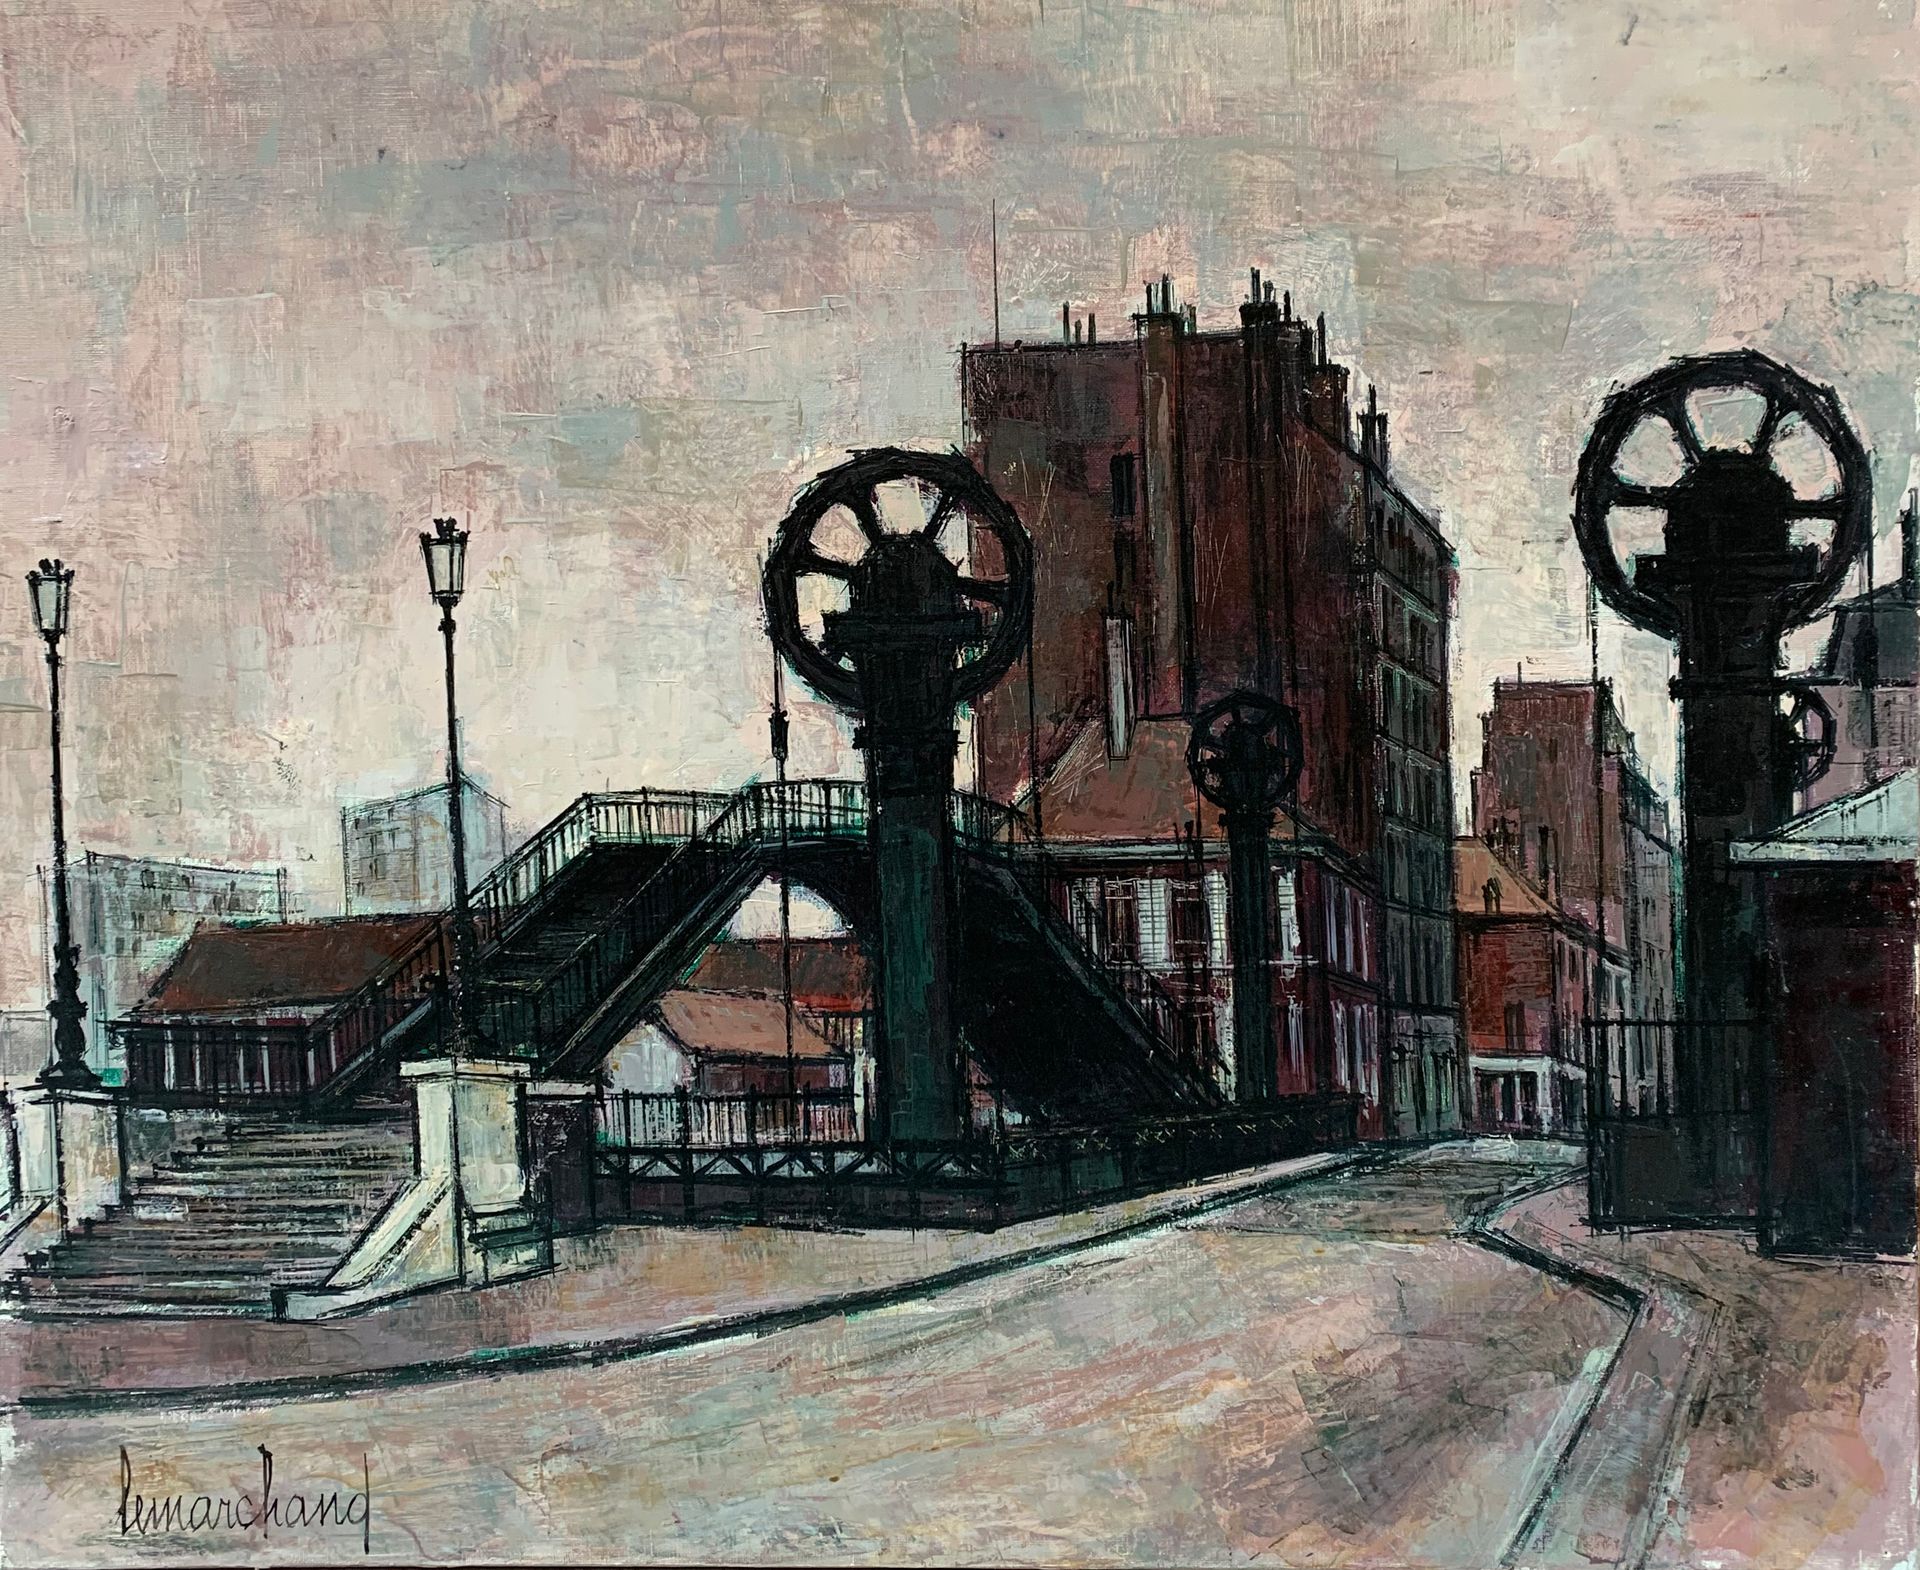 Null 皮埃尔-莱马赫德 (1906-1970)

奥尔克运河上的水闸

布面油画，左下角有签名

60 x 73厘米。